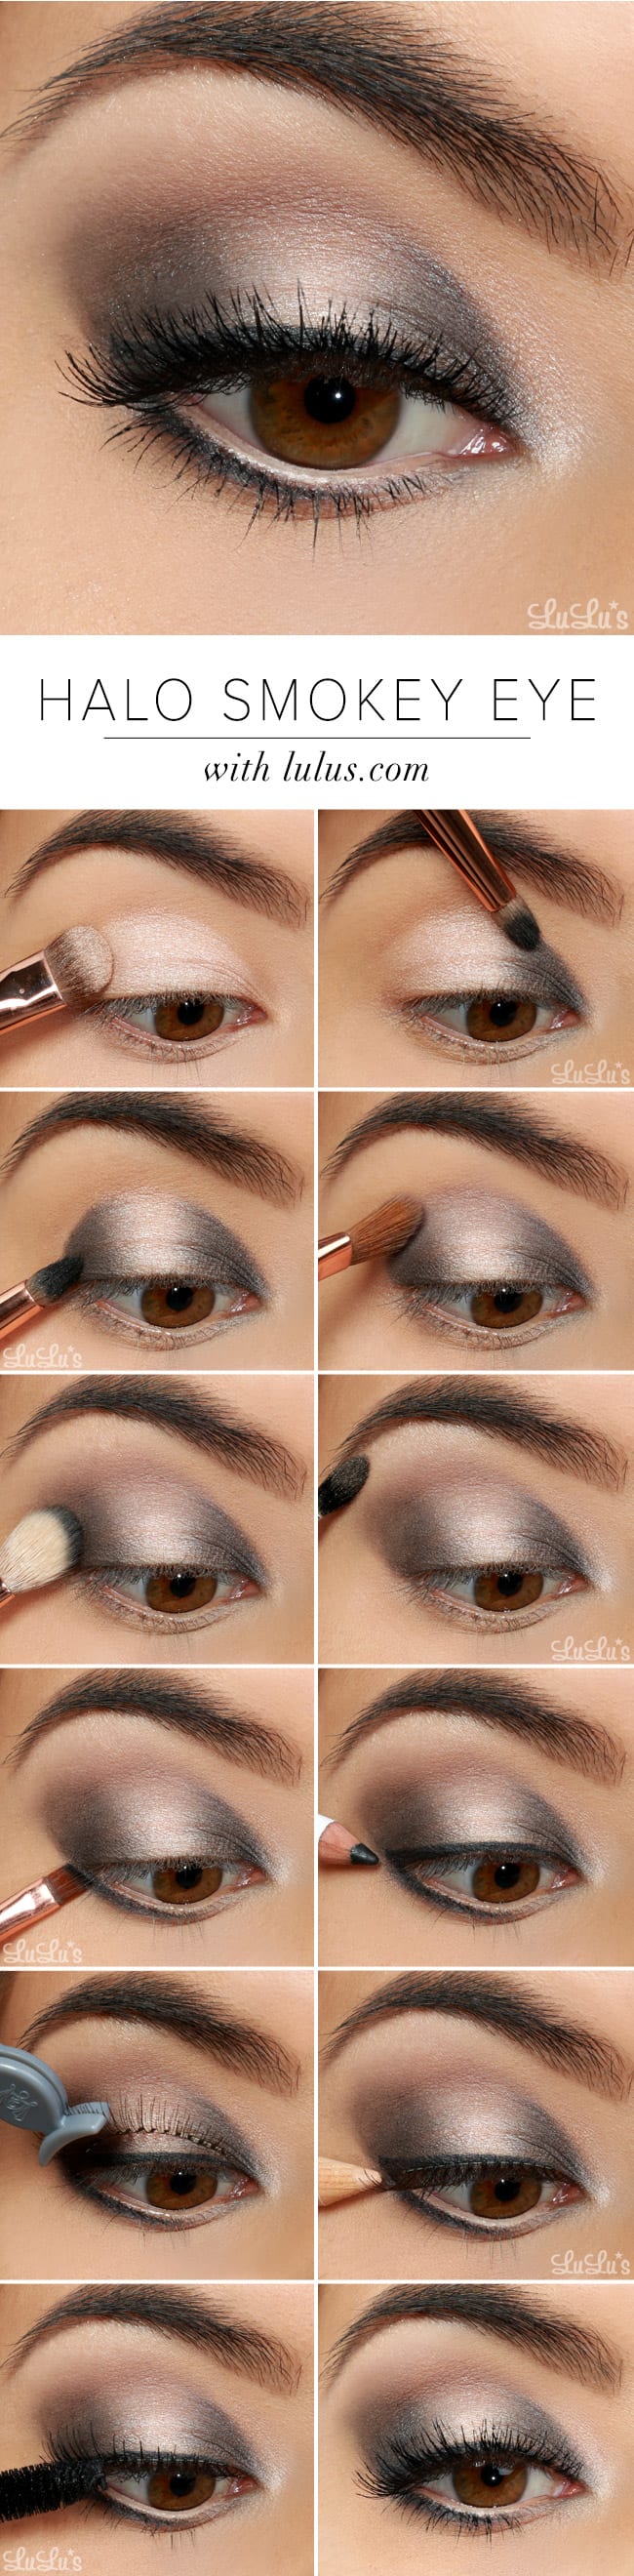 gold smokey eye tutorial step by step